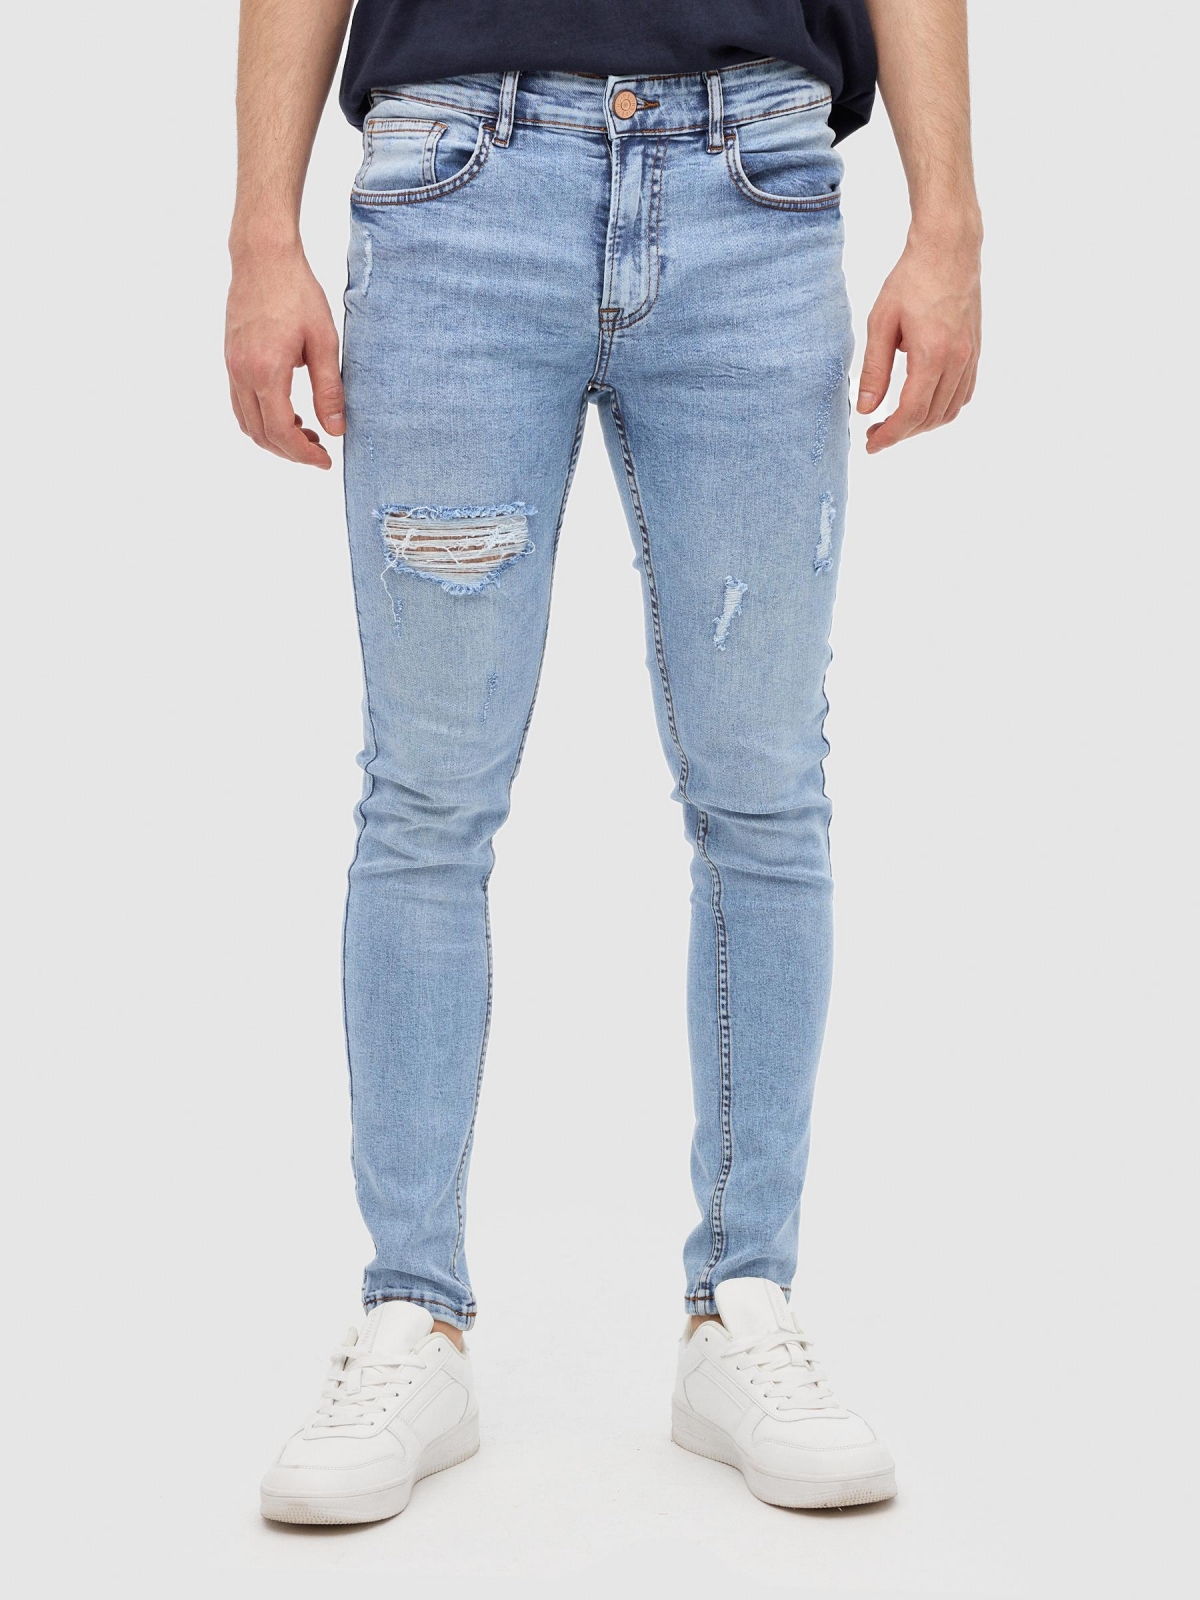 Super slim jeans blue middle front view